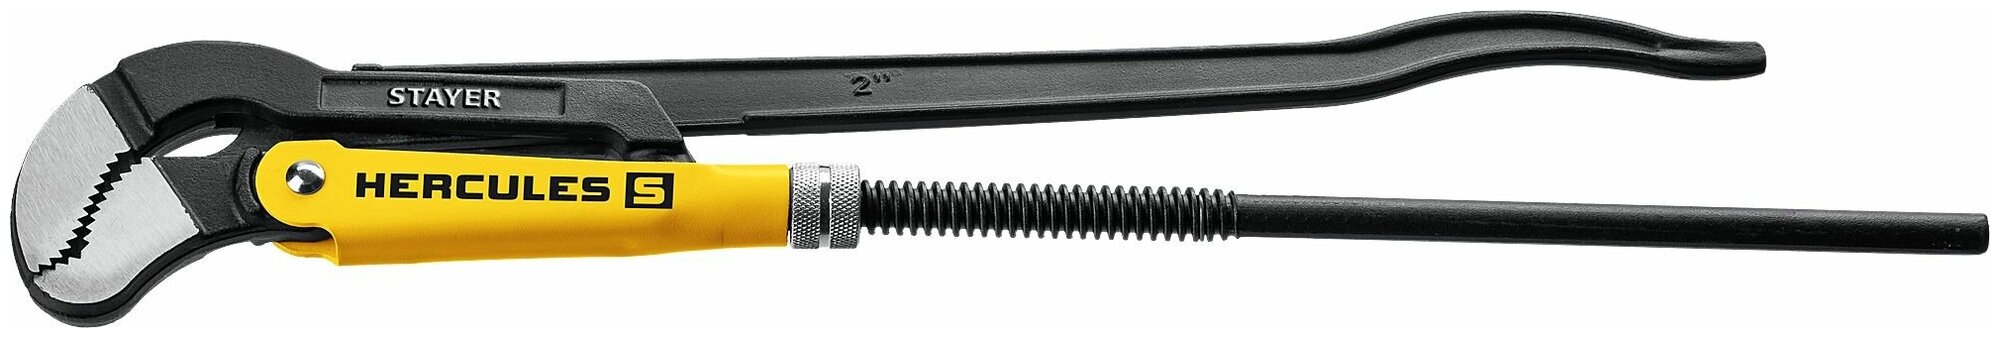 Трубный ключ с изогнутыми губками STAYER HERCULES-S №3 2 560 мм 27311-3